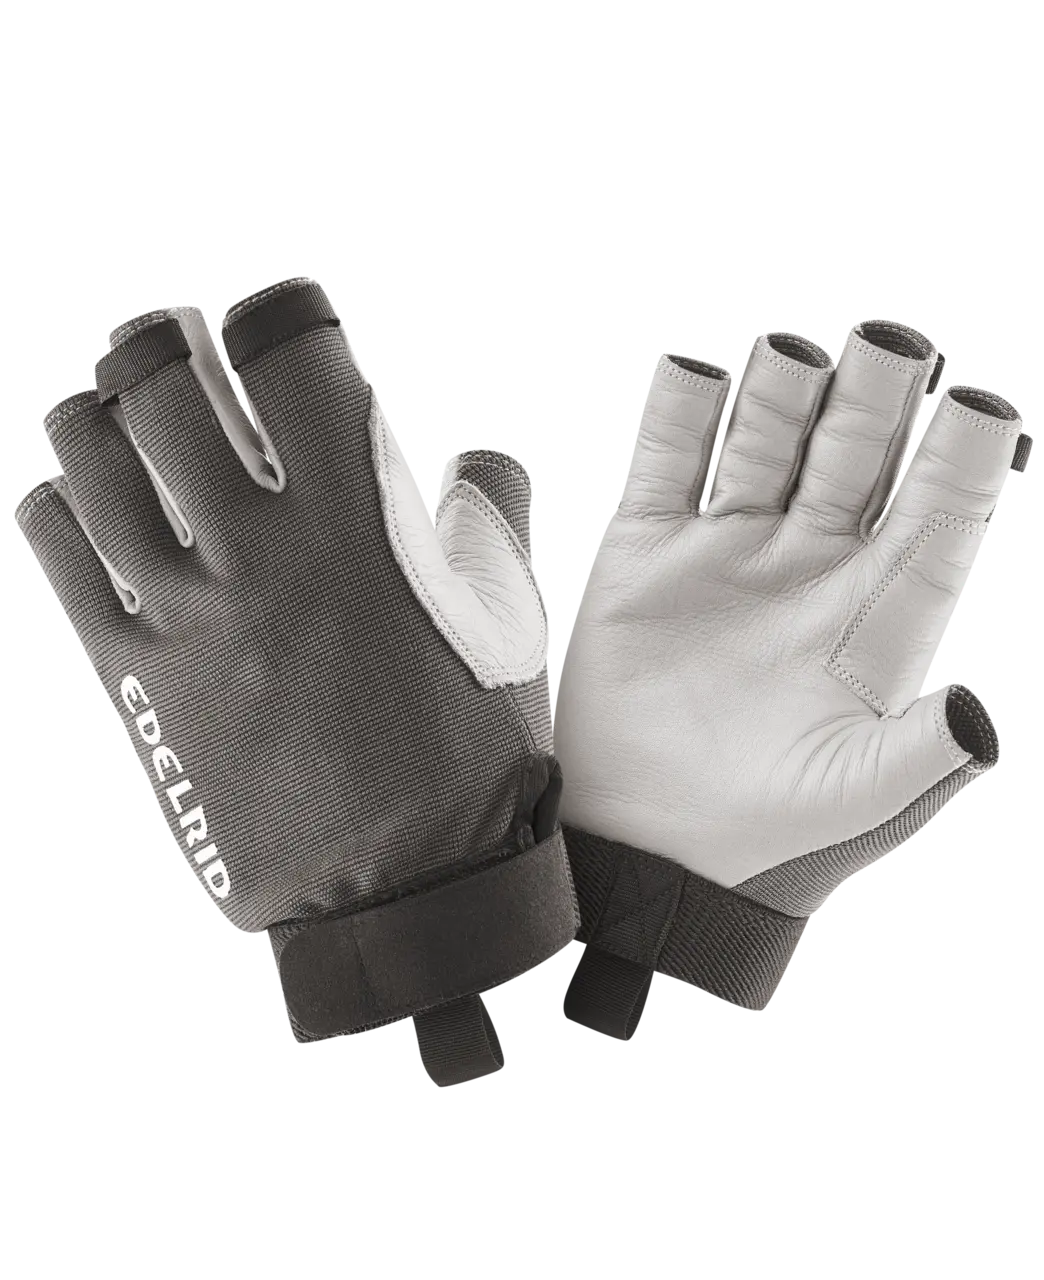 Fingerless Work Glove